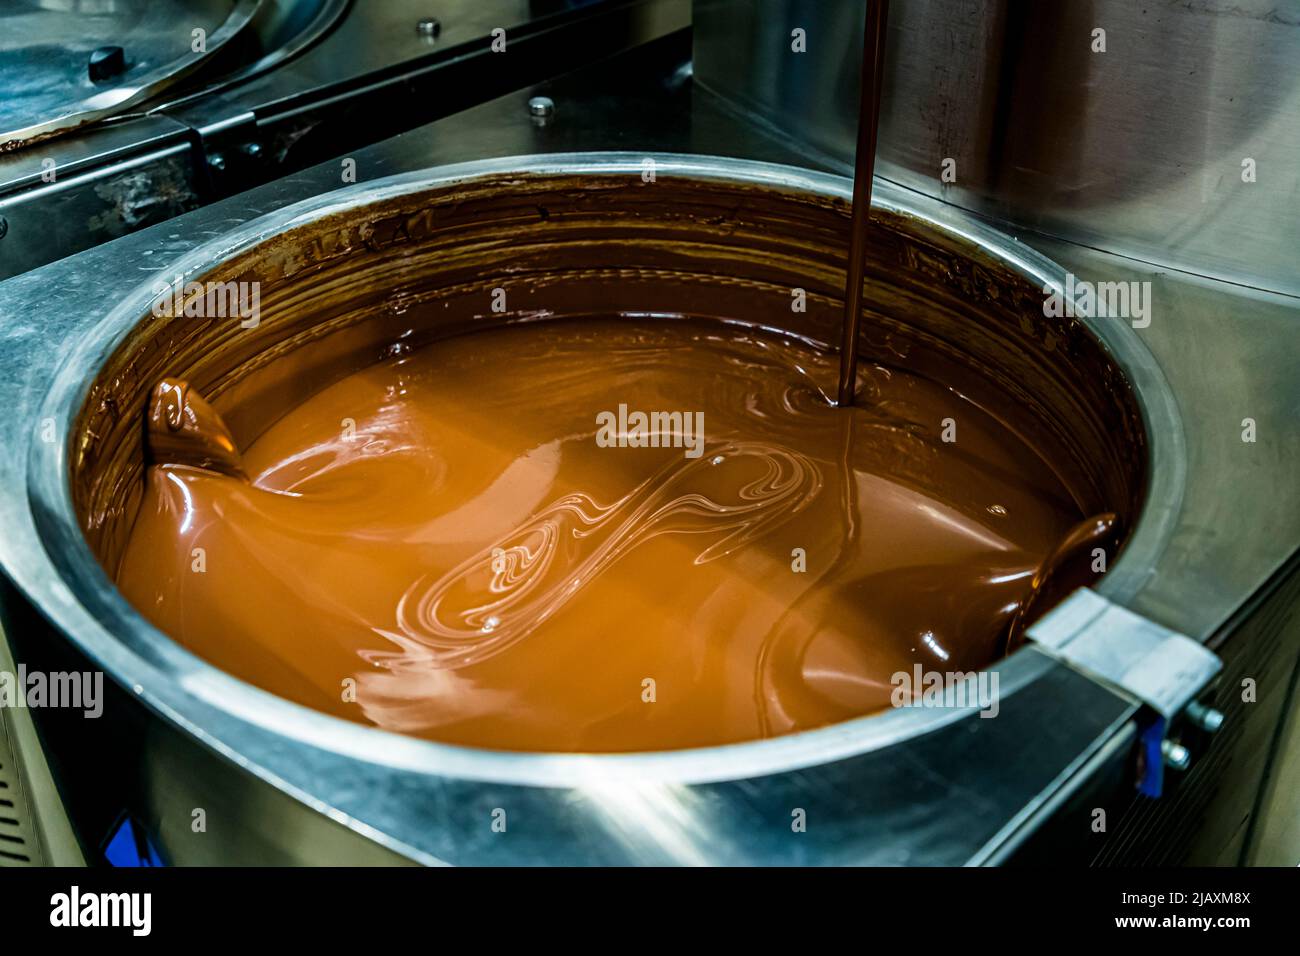 Omnom chocolate factory in Reykjavik, Iceland Stock Photo